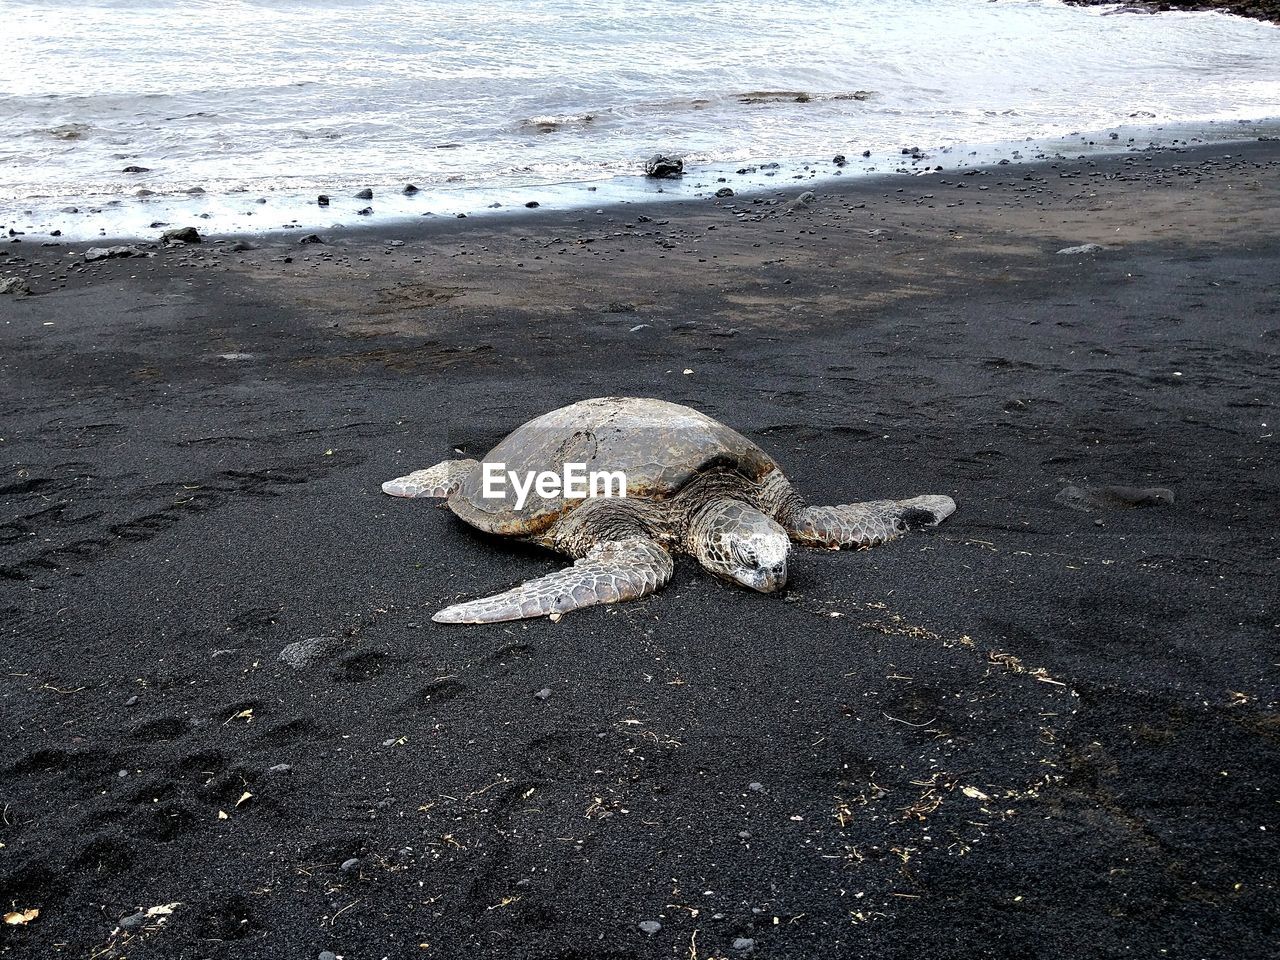 Turtle on sandy beach